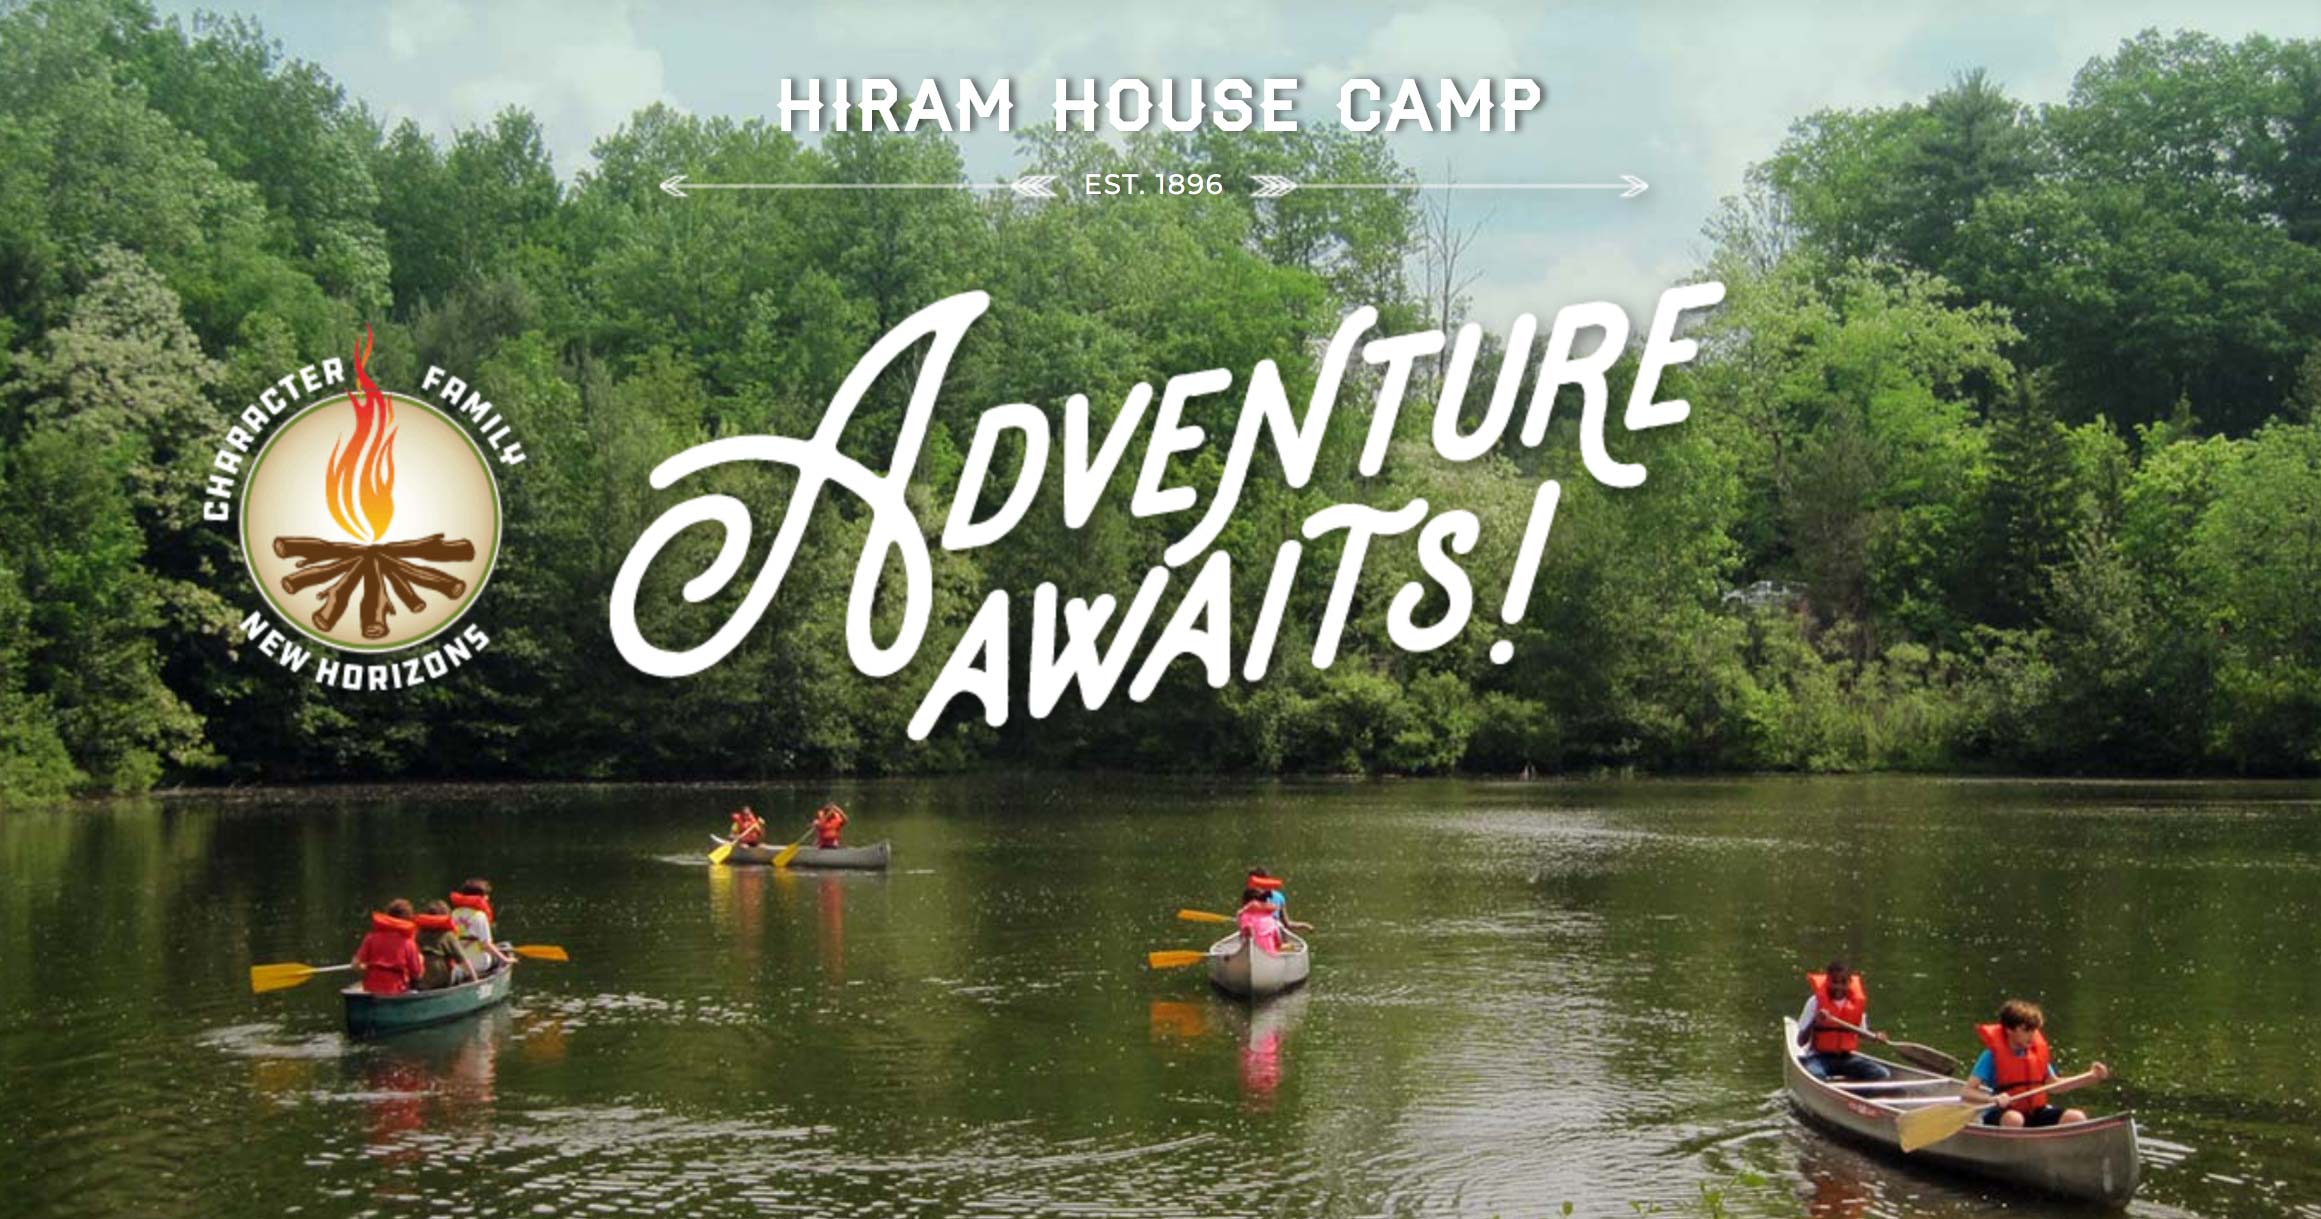 Hiram House Camp